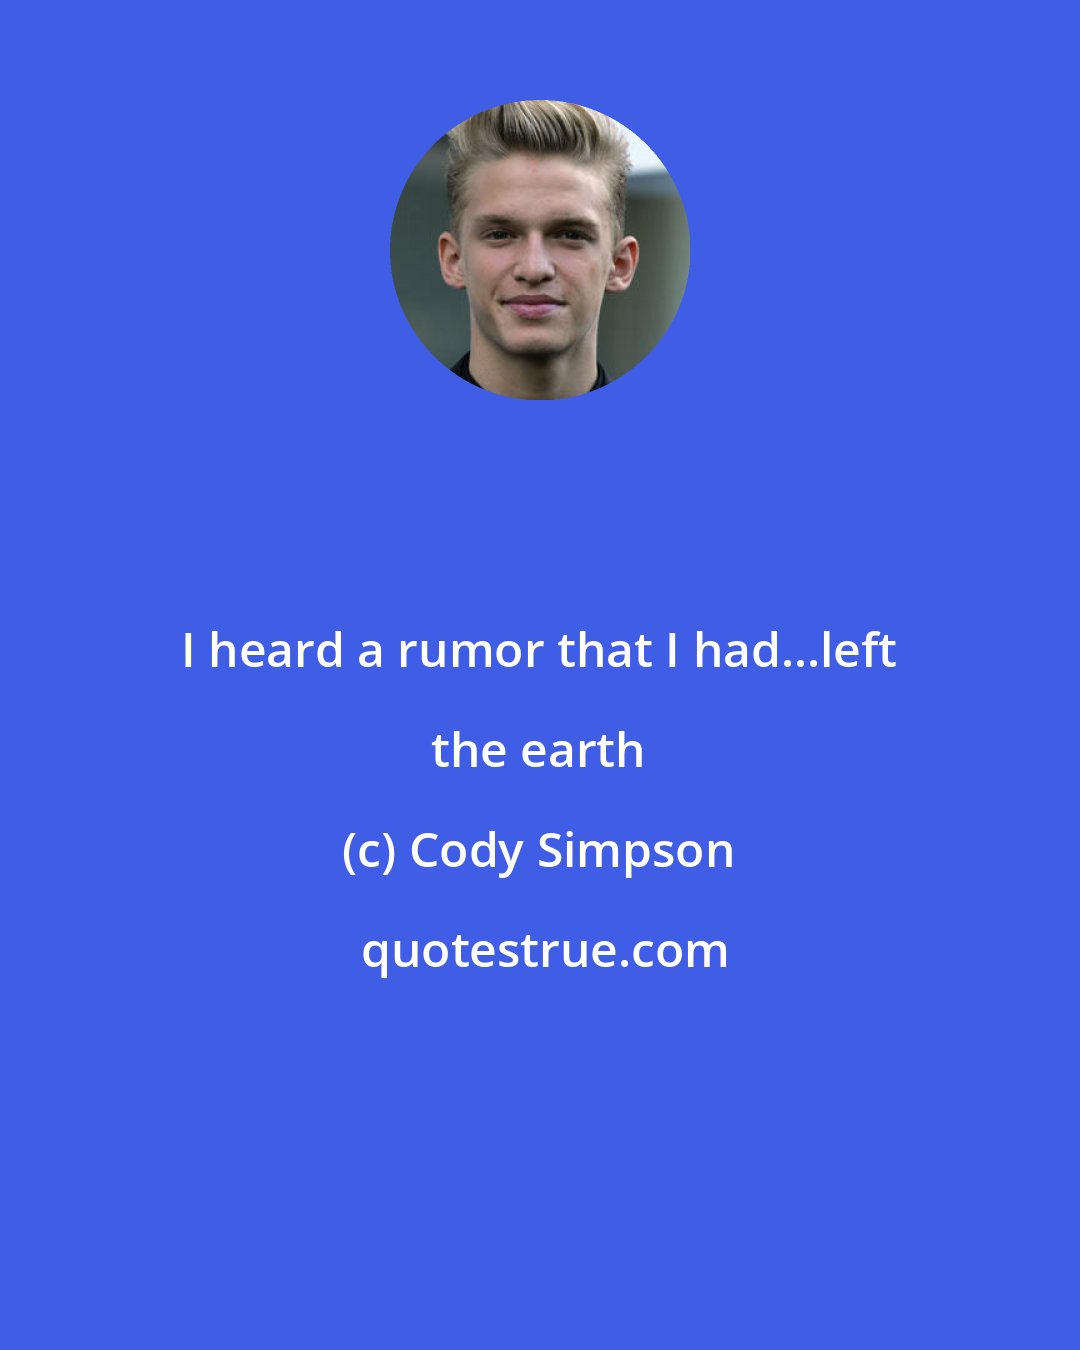 Cody Simpson: I heard a rumor that I had...left the earth